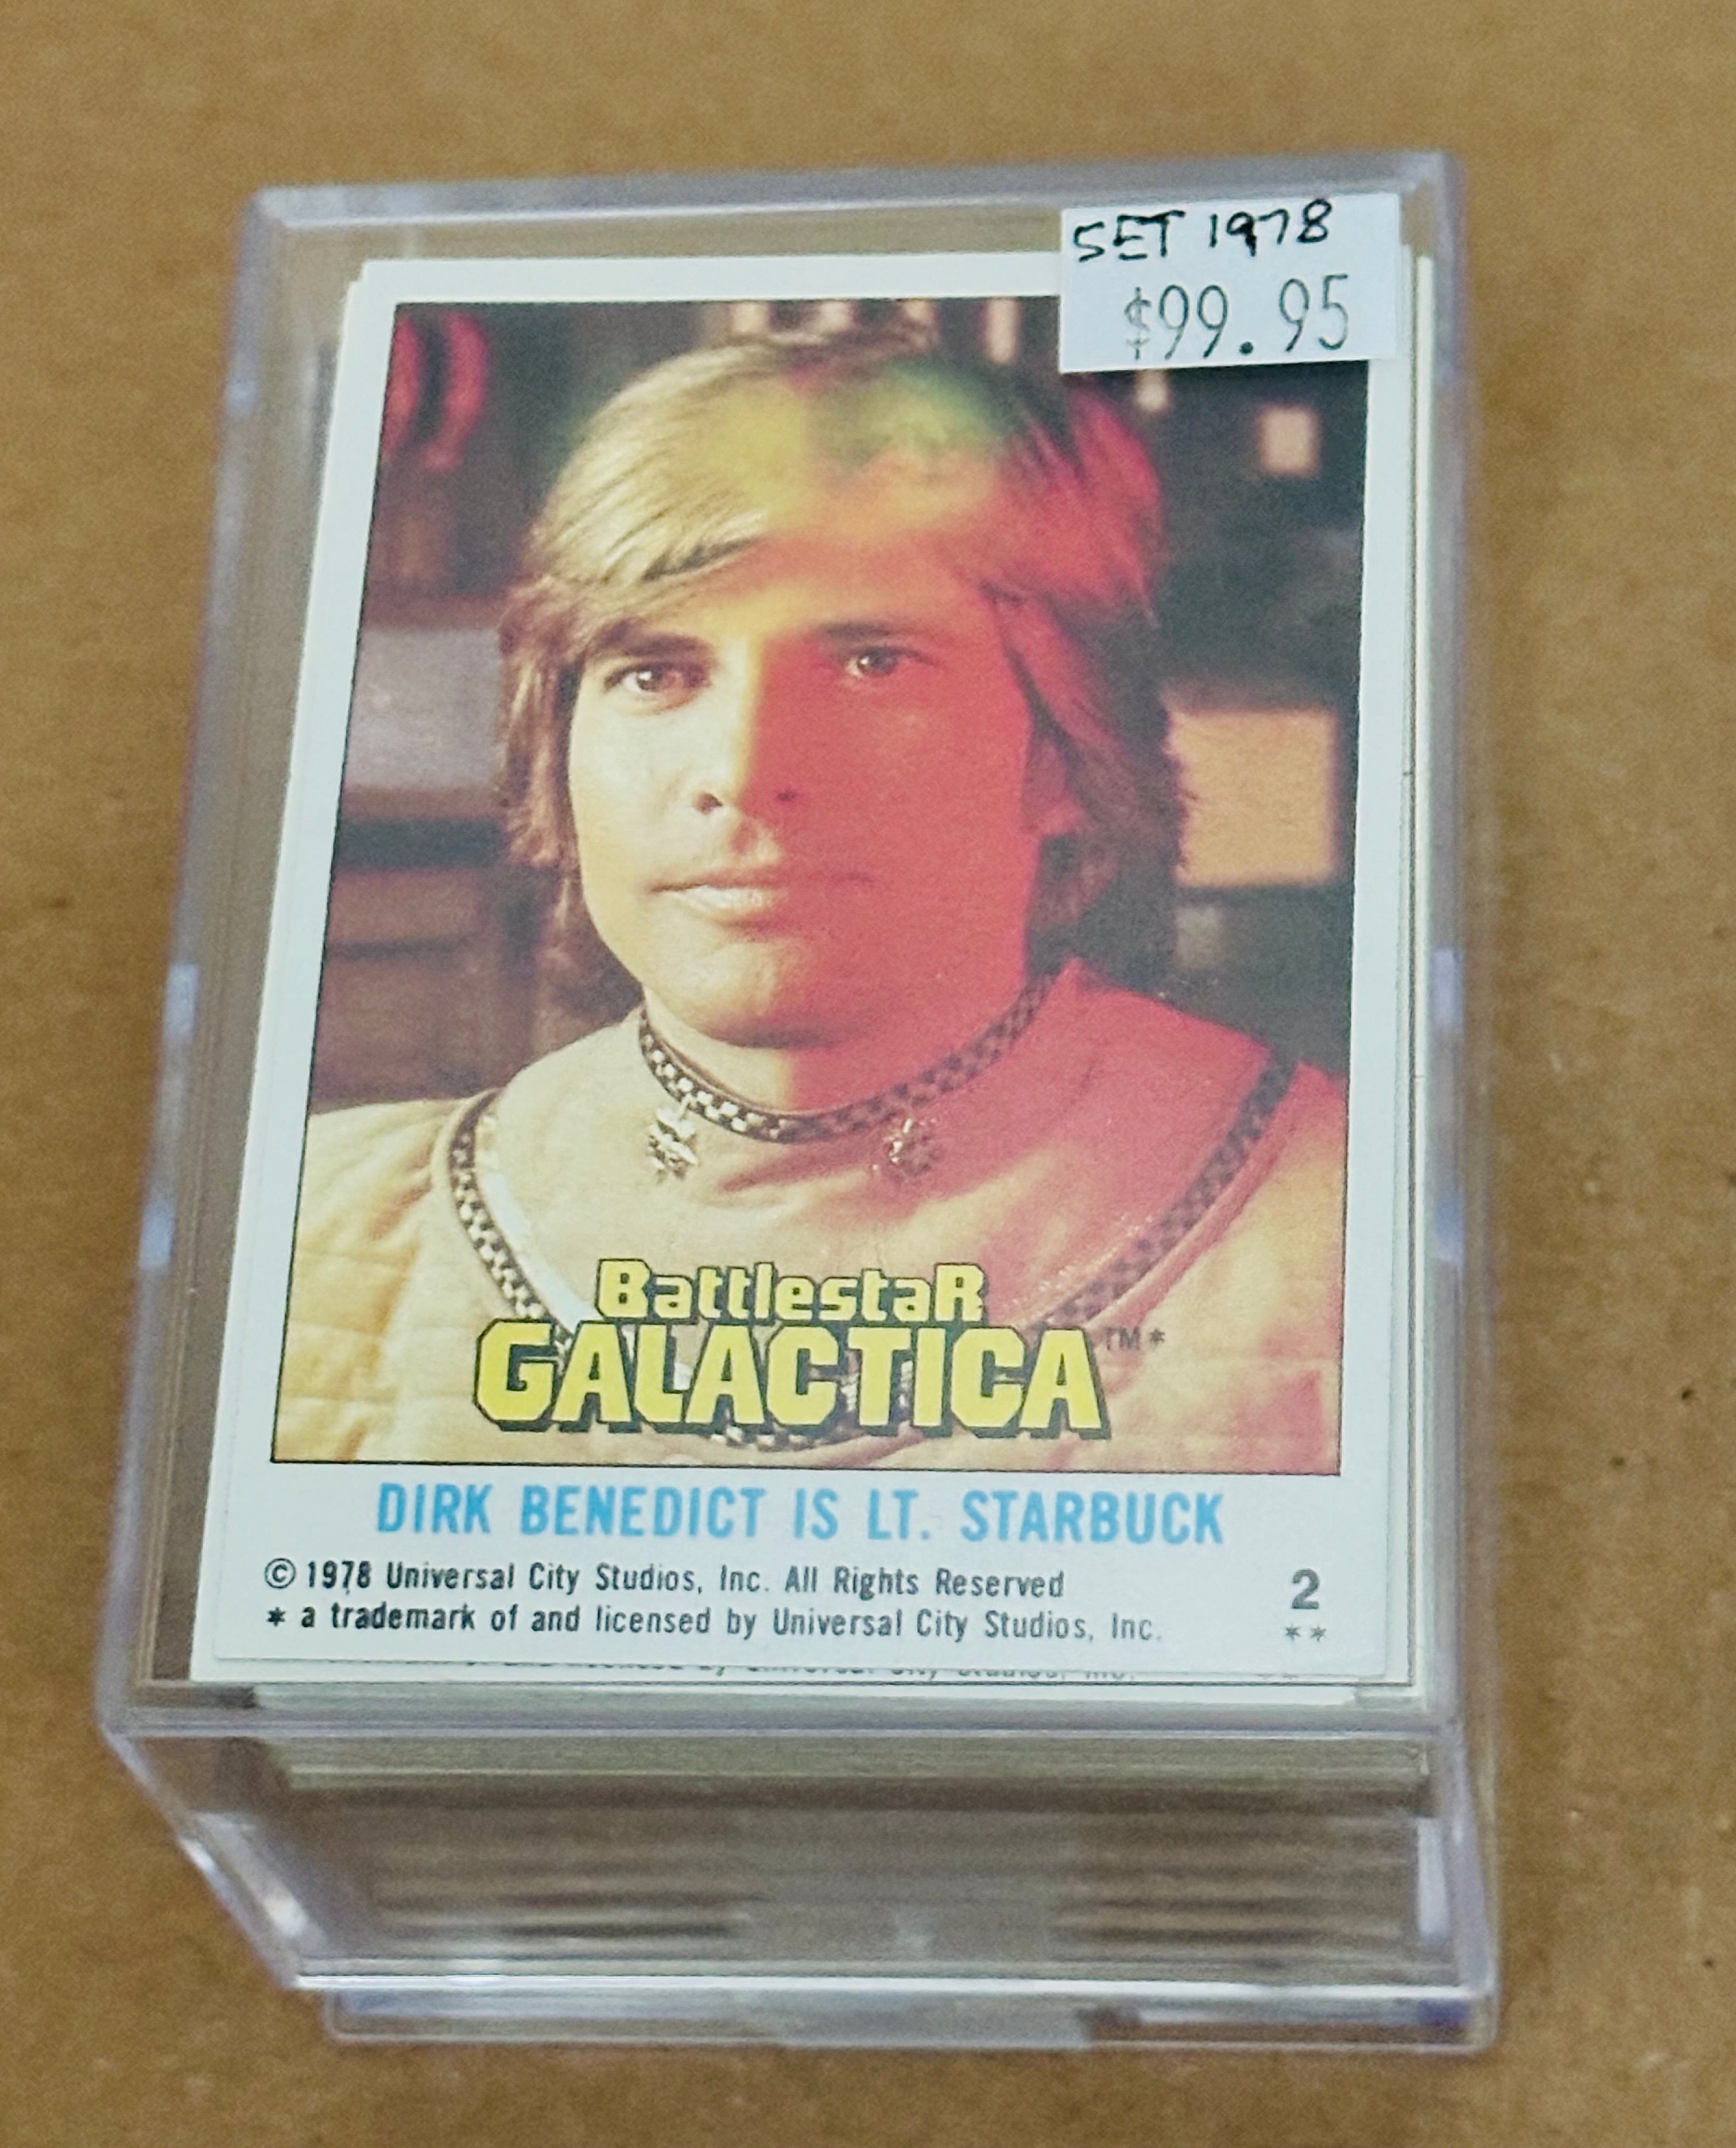 Battlestar Galactica original movie cards set 1978